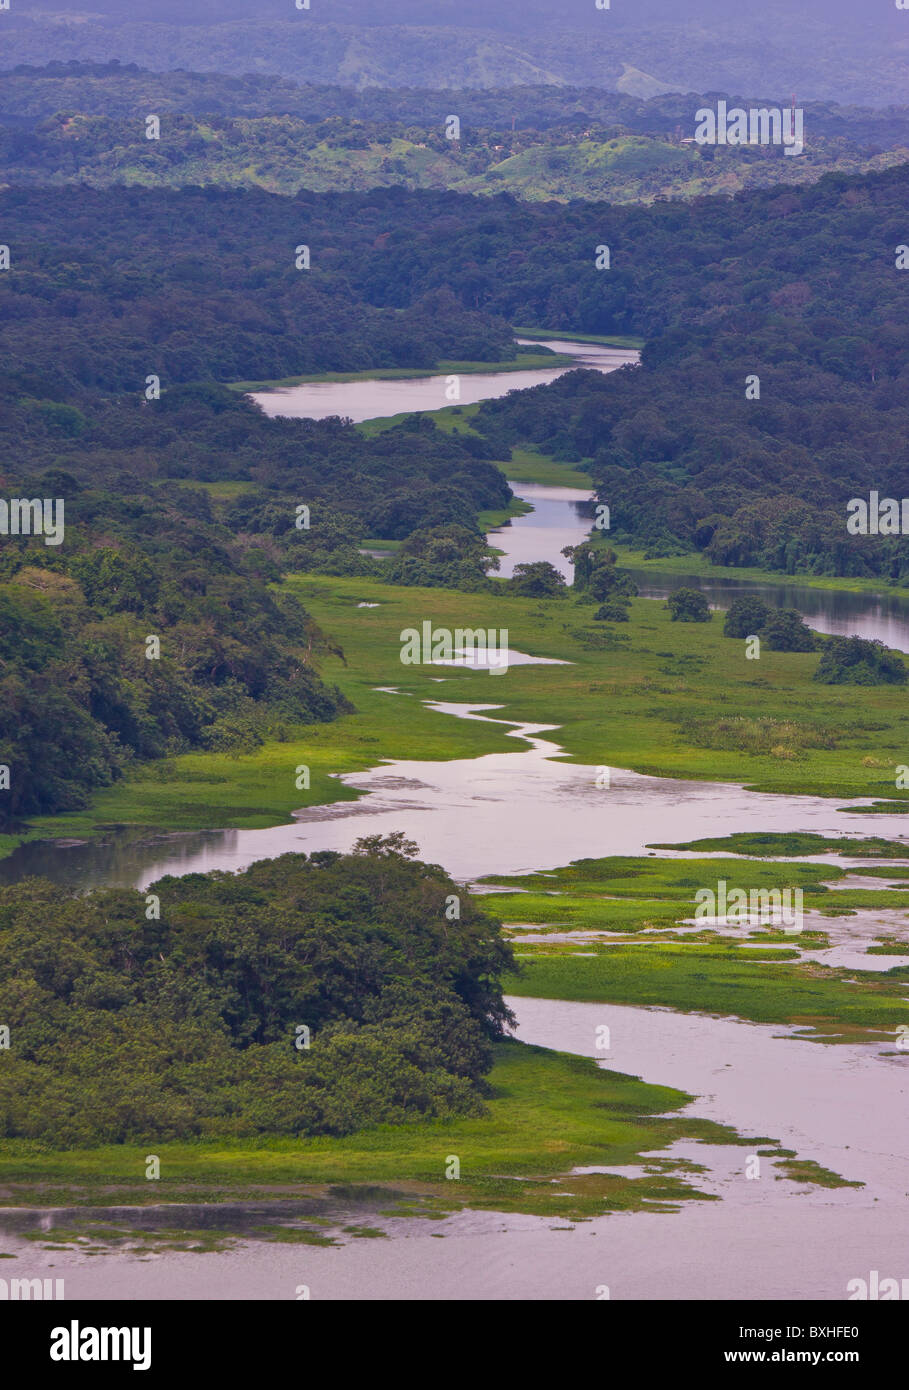 GAMBOA, PANAMA - Fluss und den Regenwald entlang Panamakanal-Zone. Stockfoto